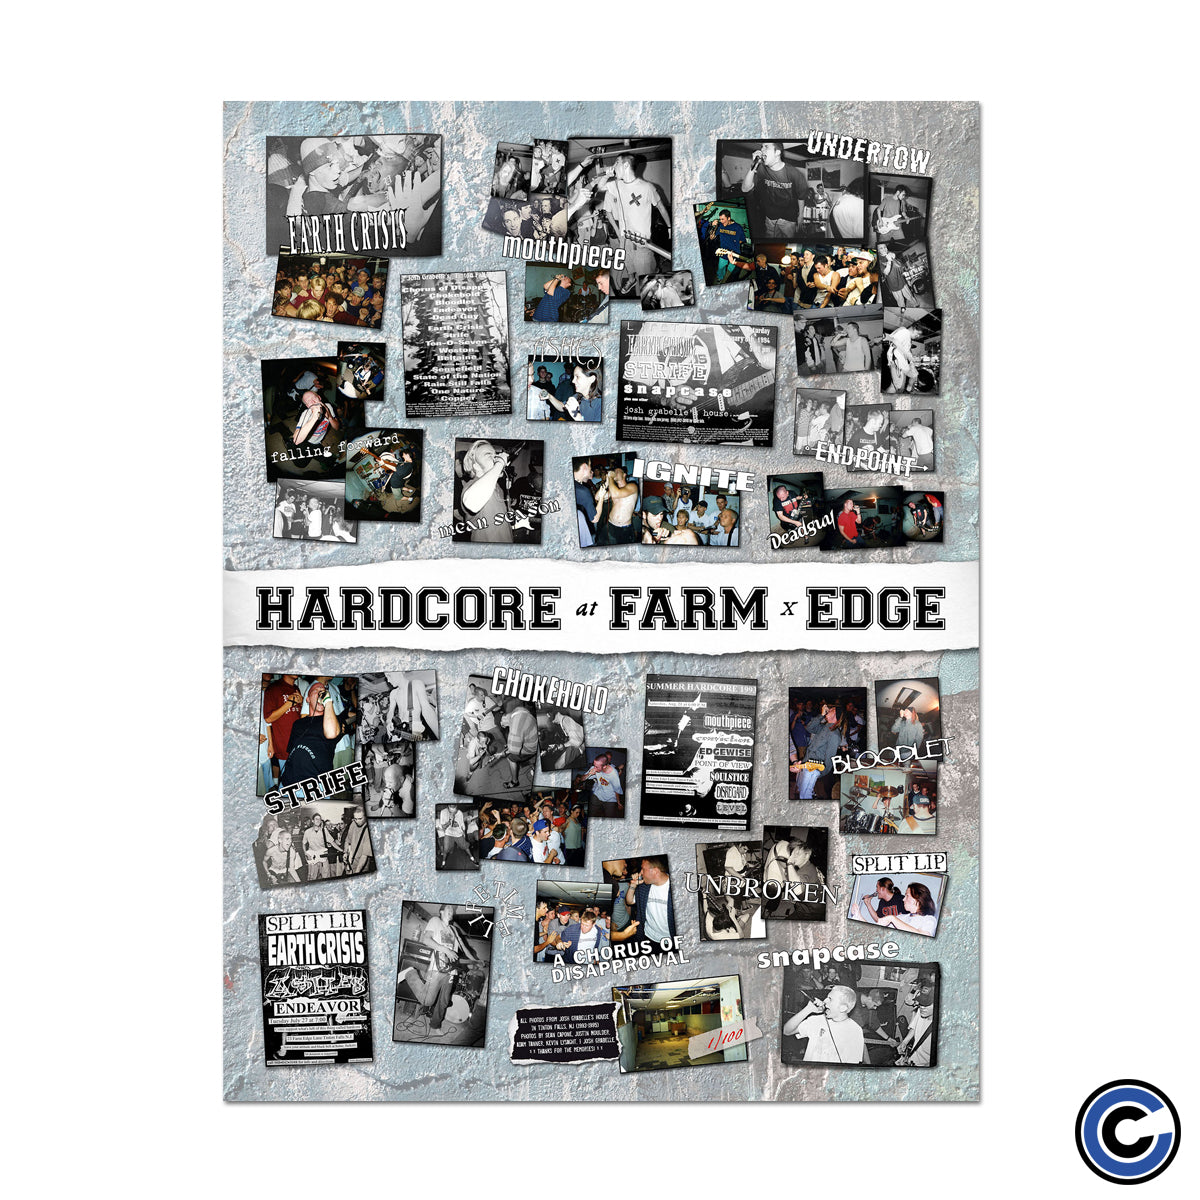 Trustkill Records "Hardcore At Farm X Edge" Poster